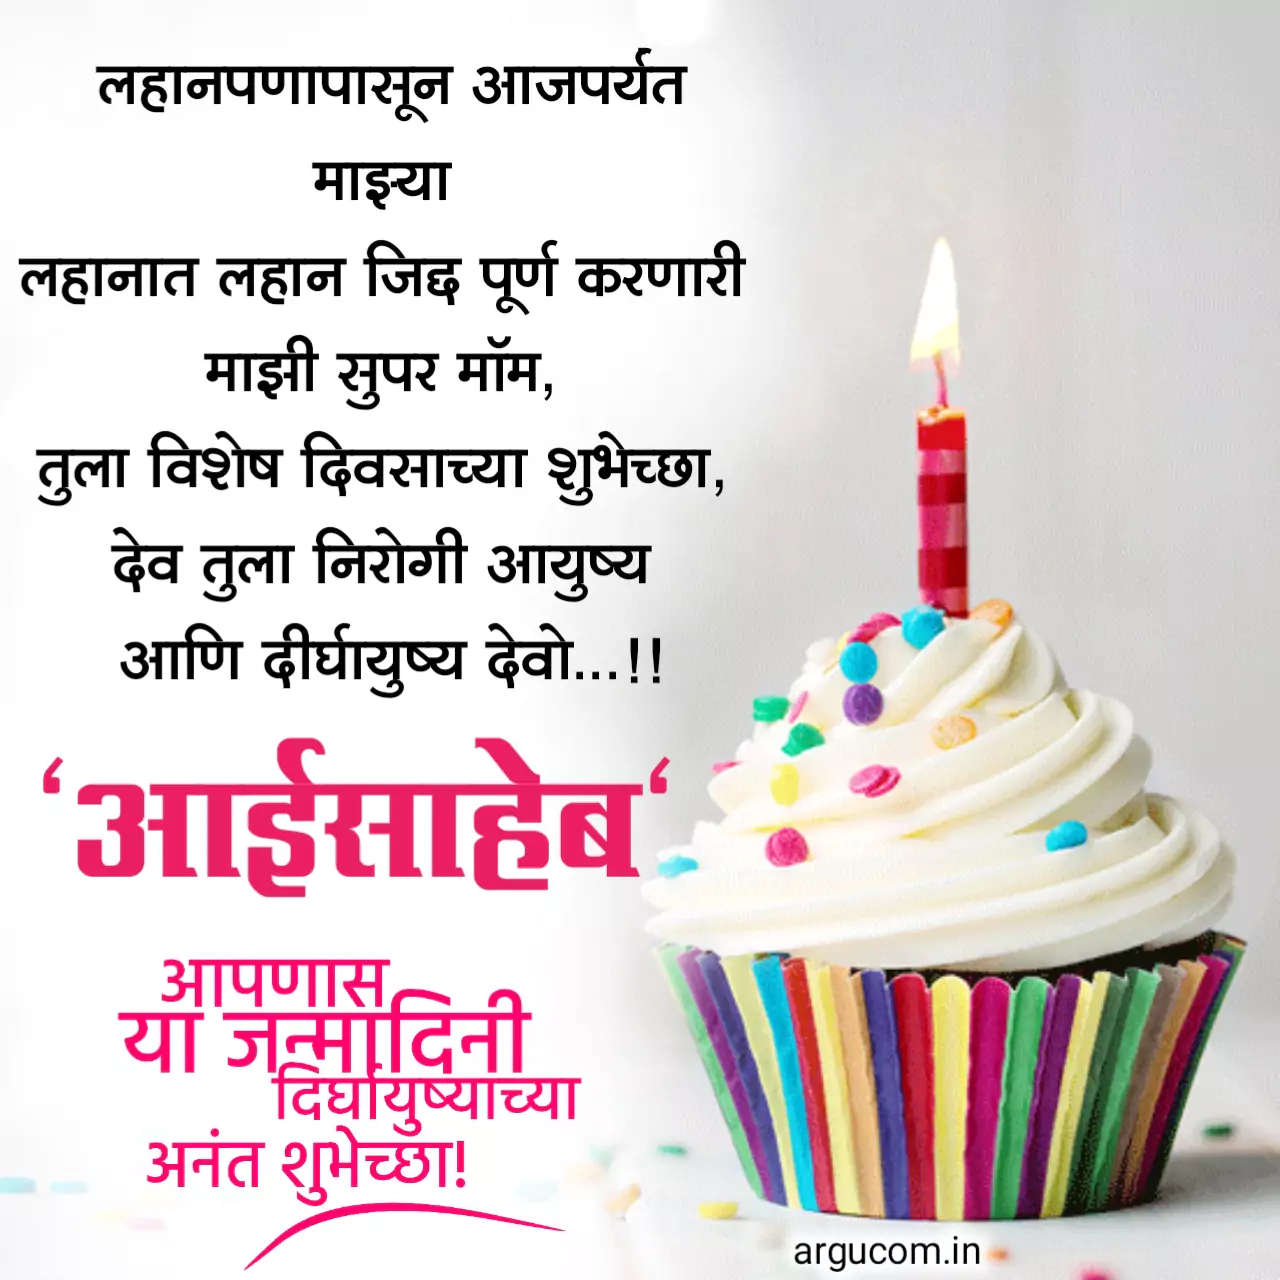 Happy birthday aai in marathi